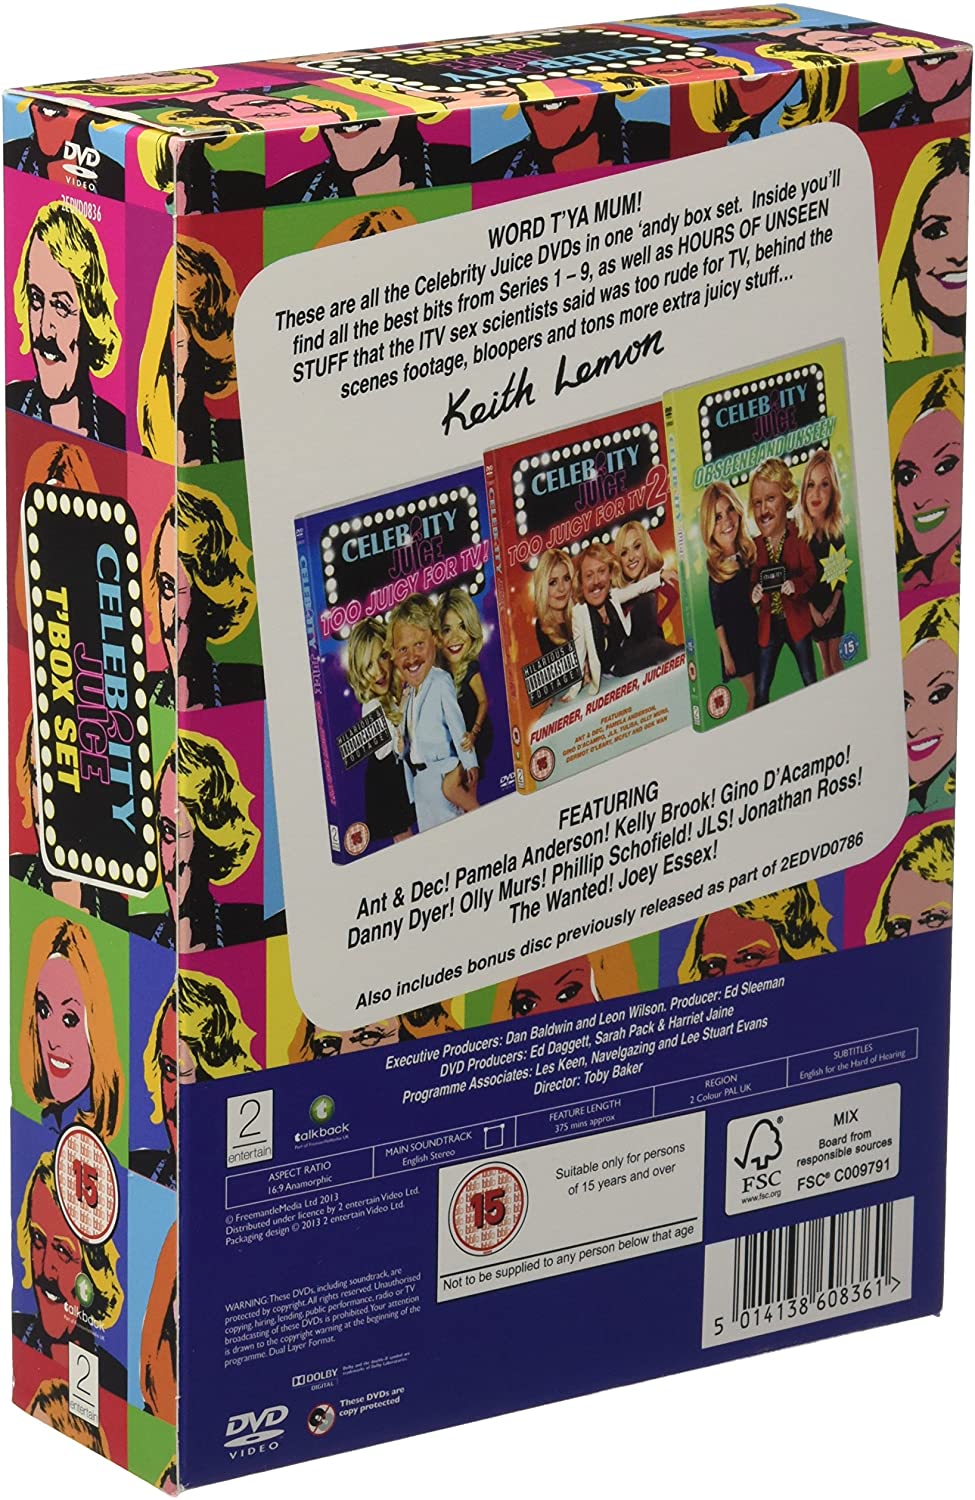 Celebrity Juice: T&#39;Box Set [DVD]